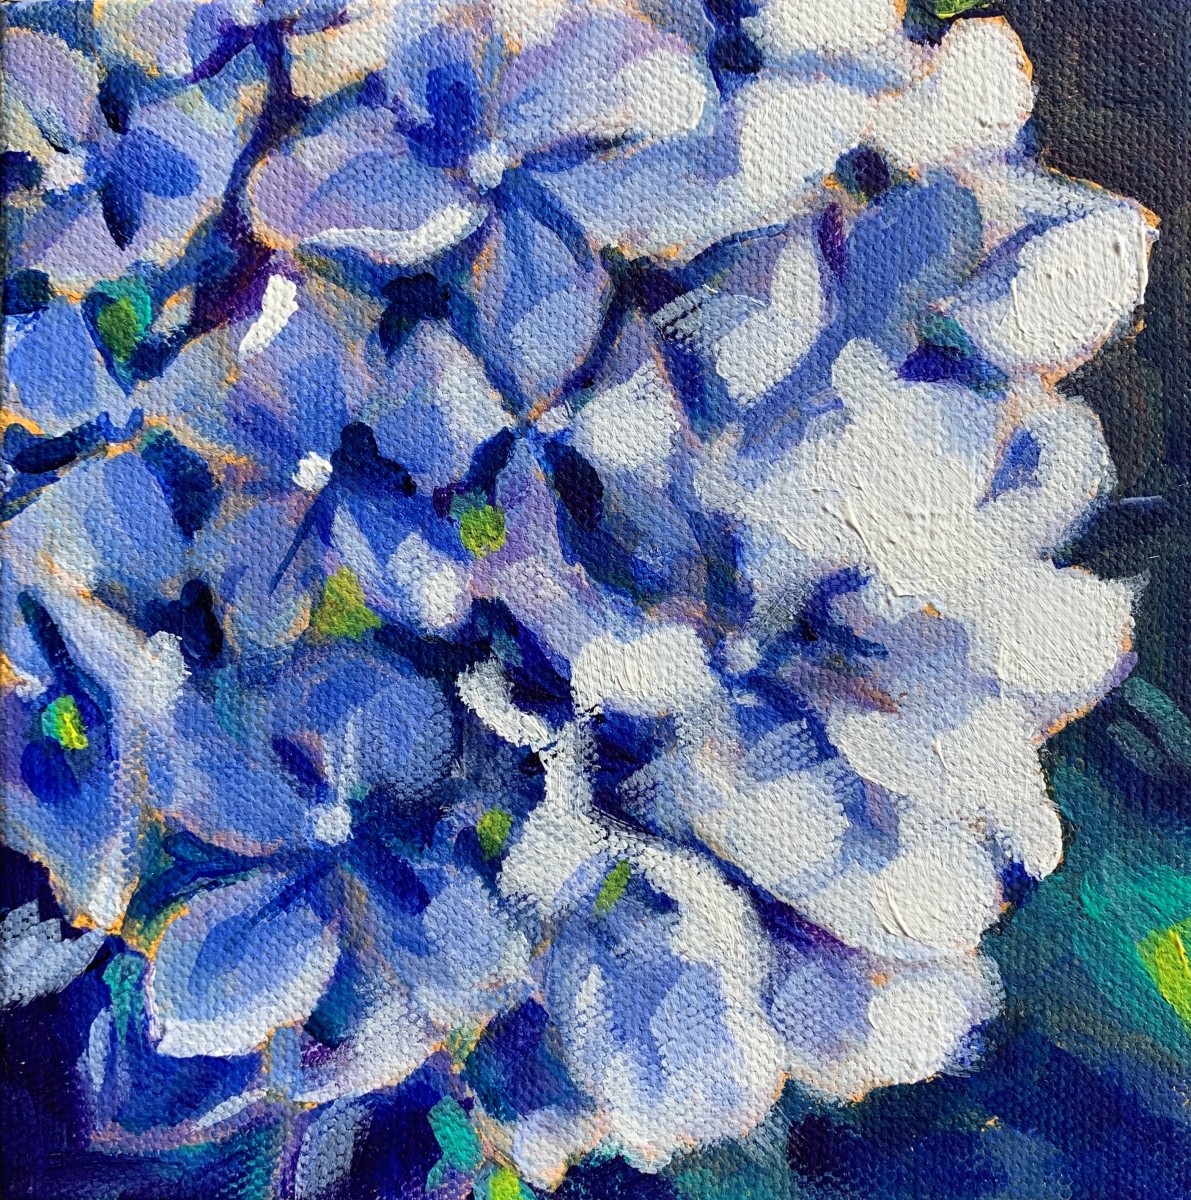 Hydrangea series: Blue by Marcia Hoeck 